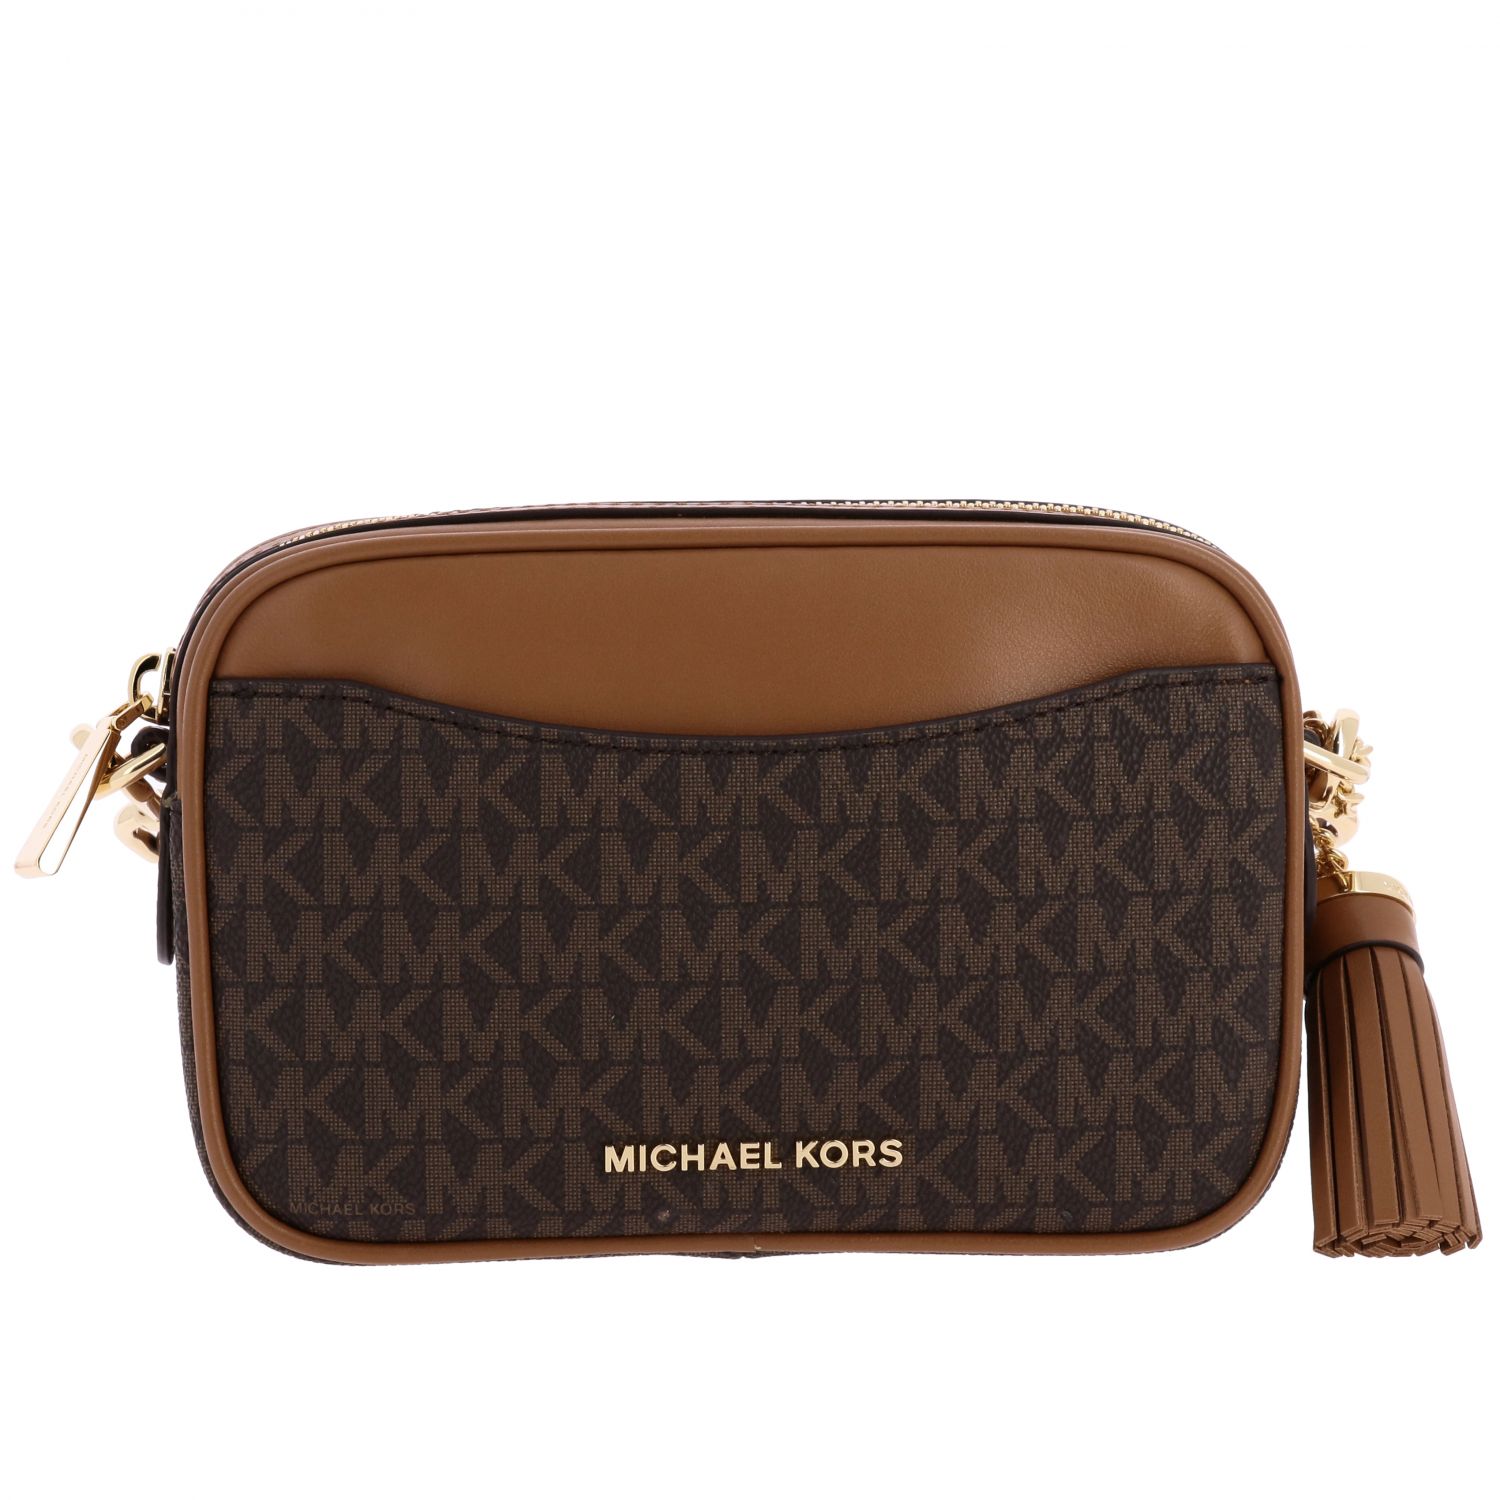 Michael Kors Outlet: Michael bag / pouch with MK print - Dark | Michael ...